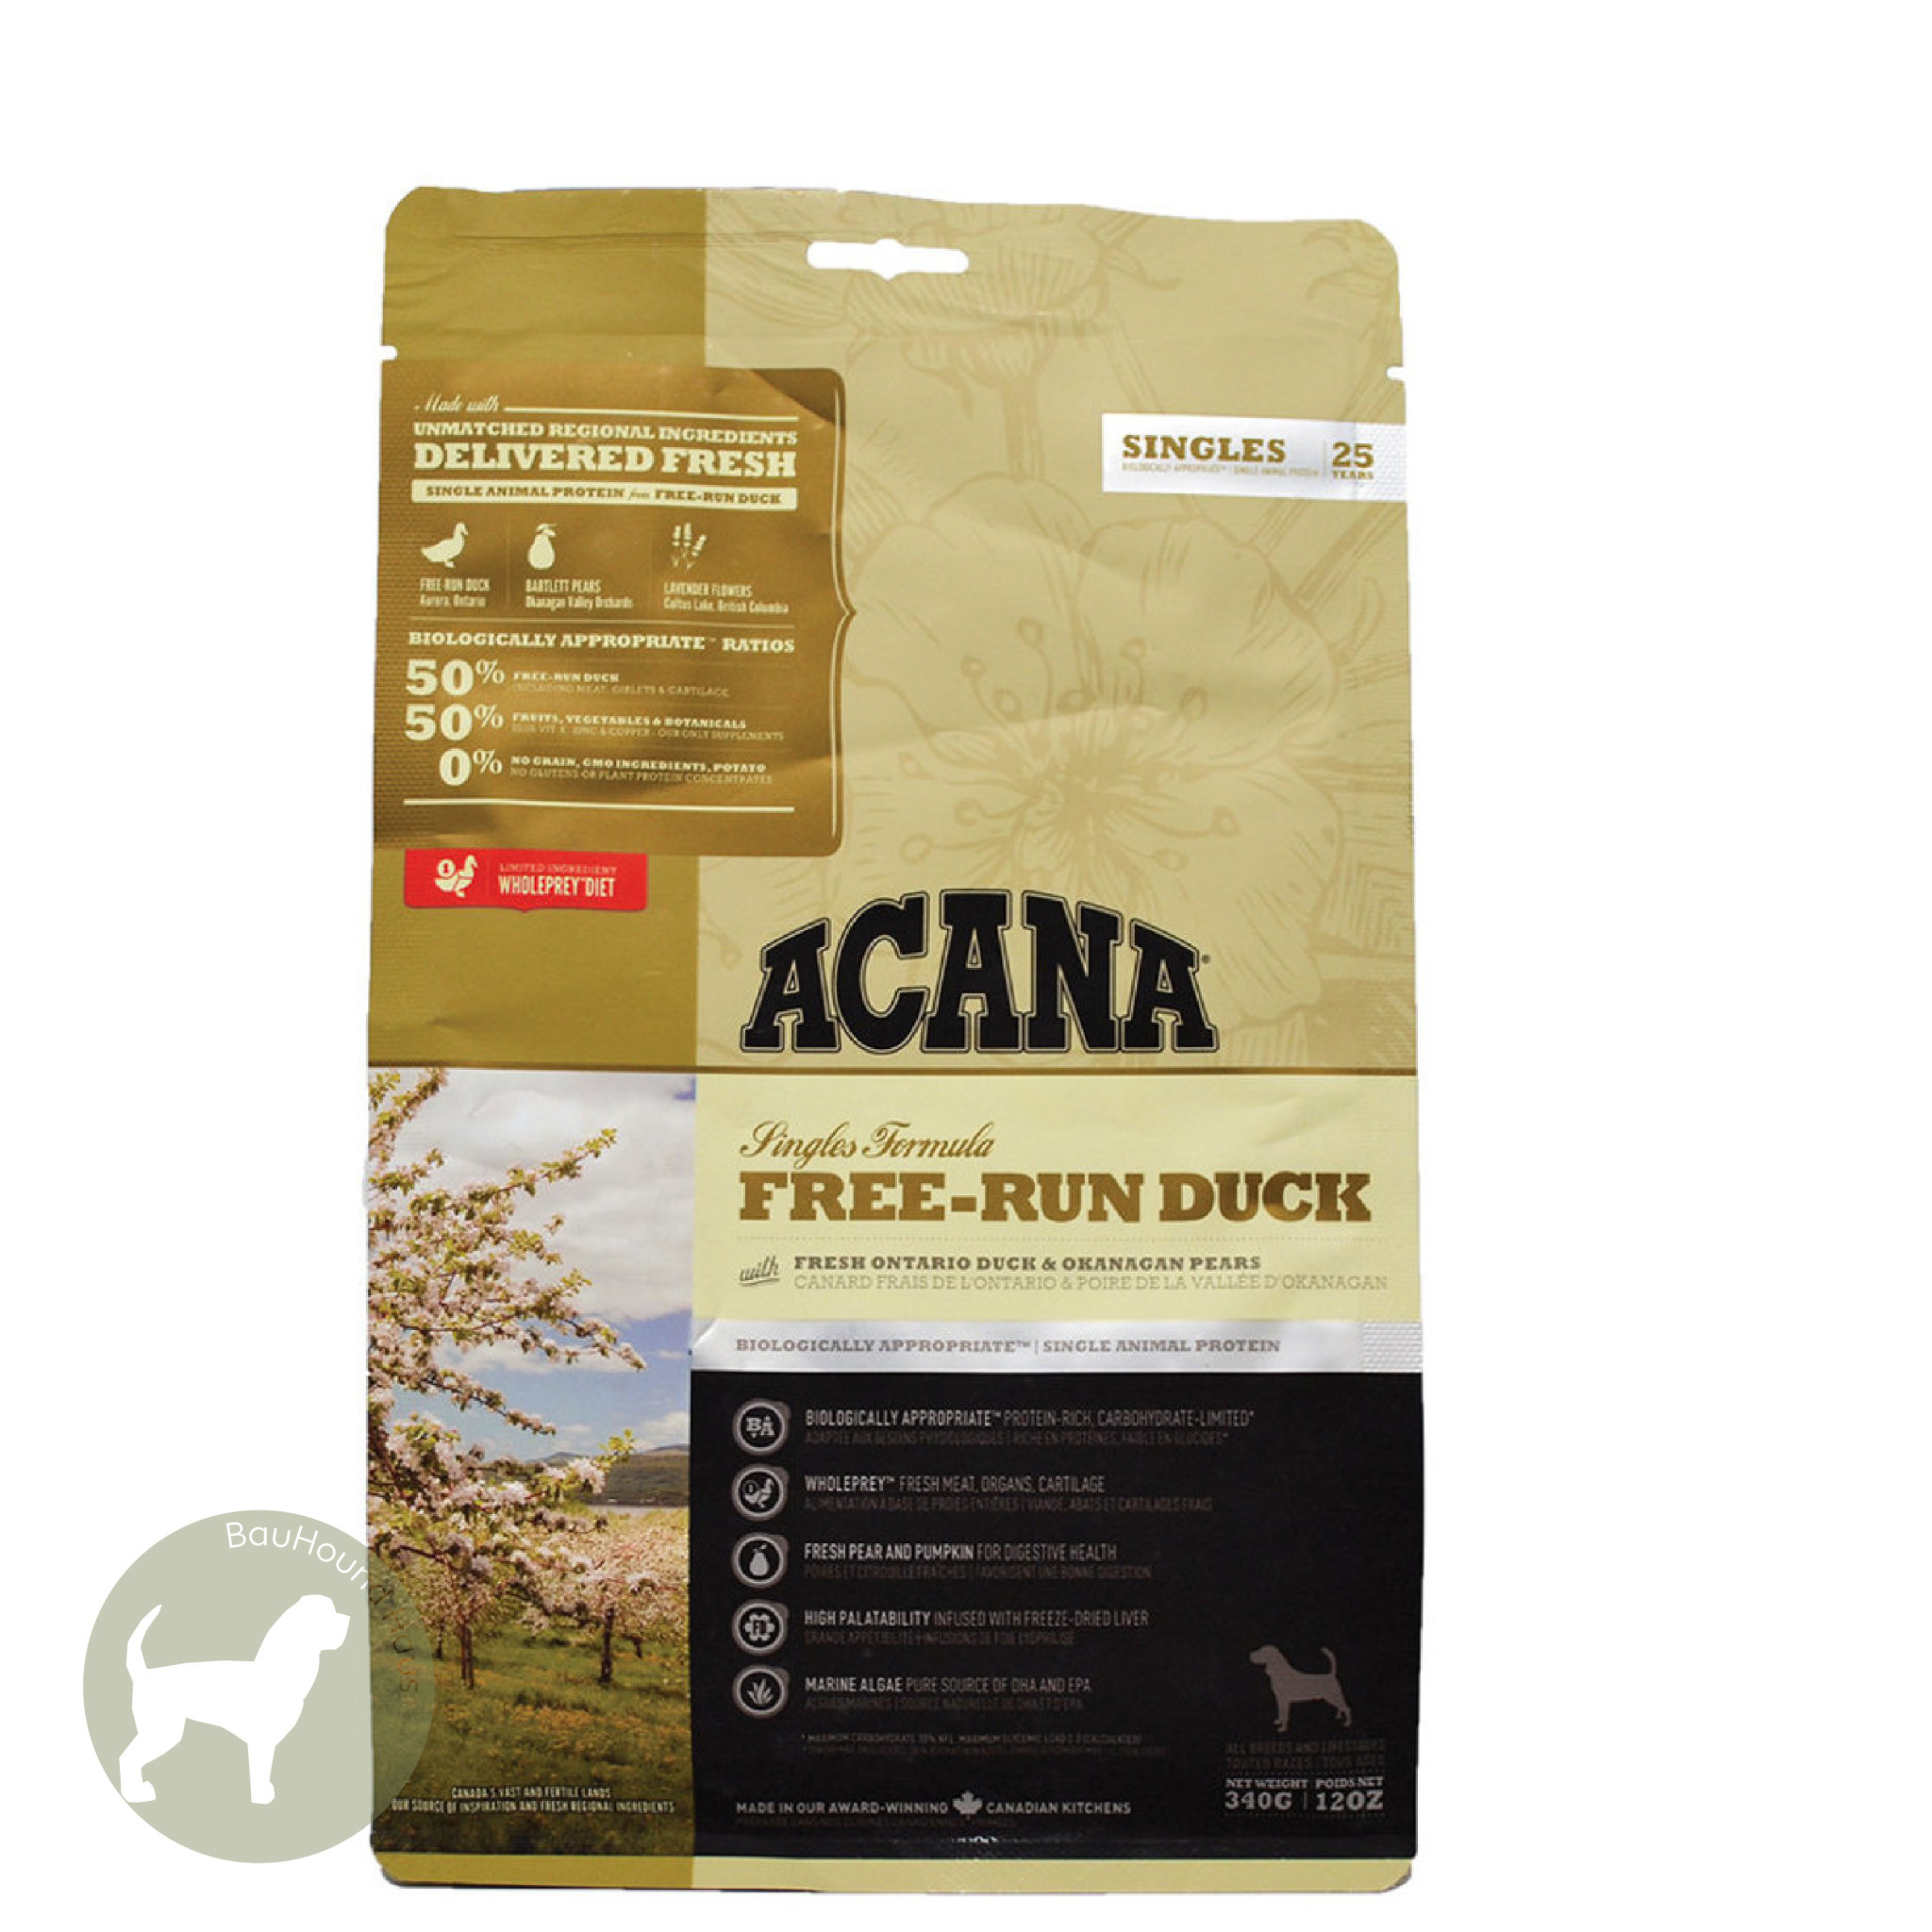 Acana Acana SINGLES Grain-Free  Duck & Pear Recipe Kibble, 5.8 kg